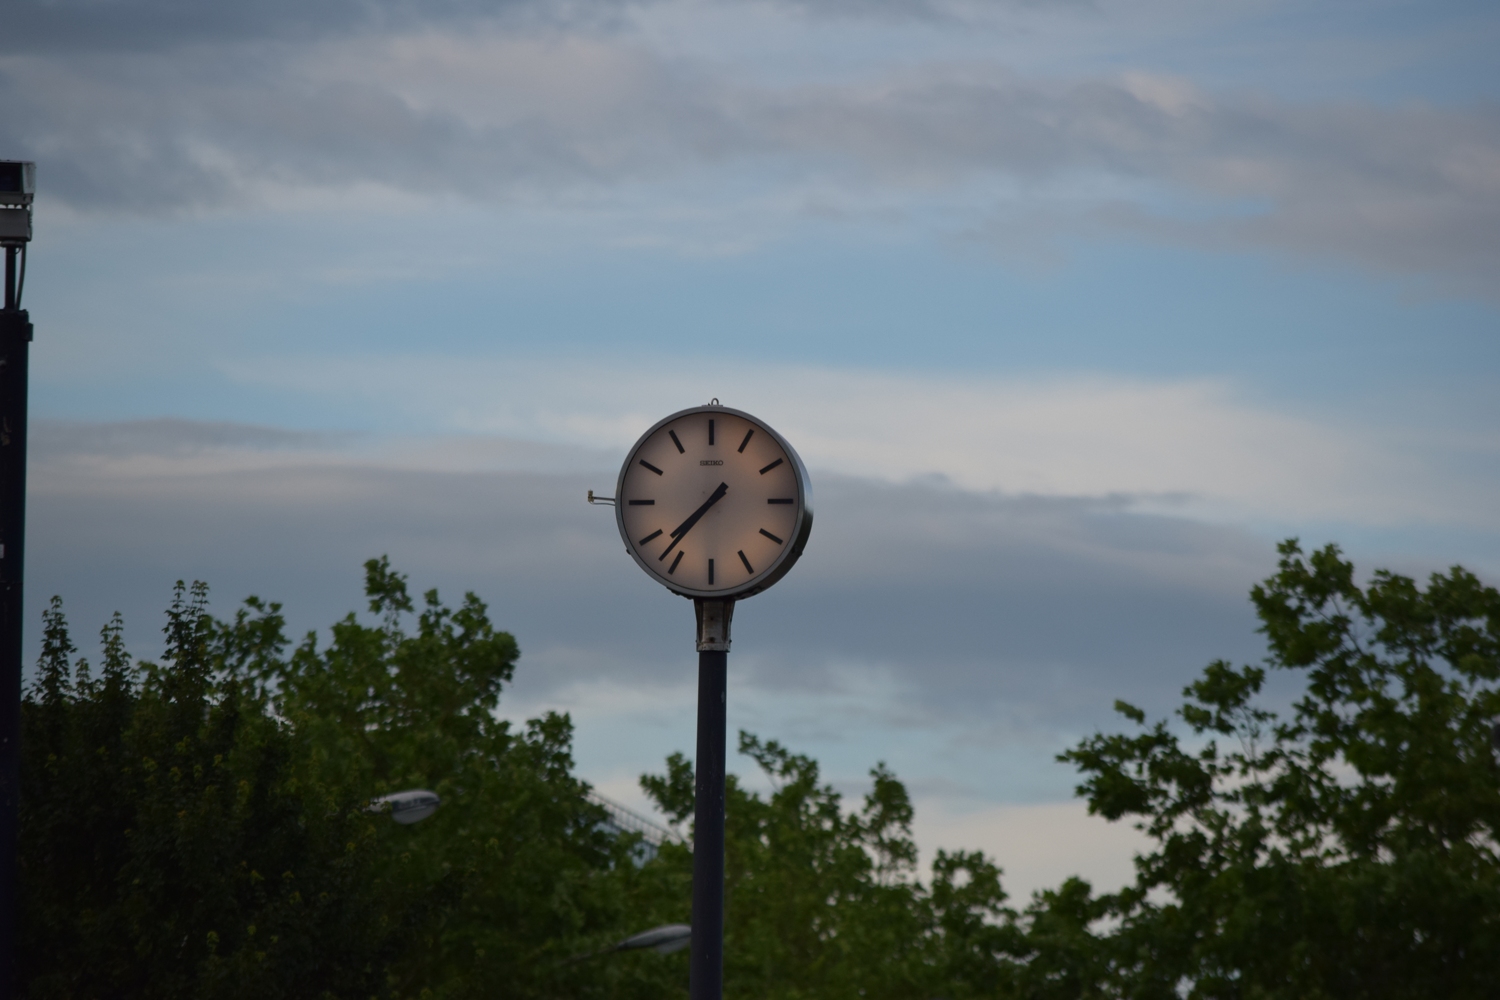 Nikkor 55-300mm clock seen from 30m, Elder Gate, Milton Keynes, 200 mm